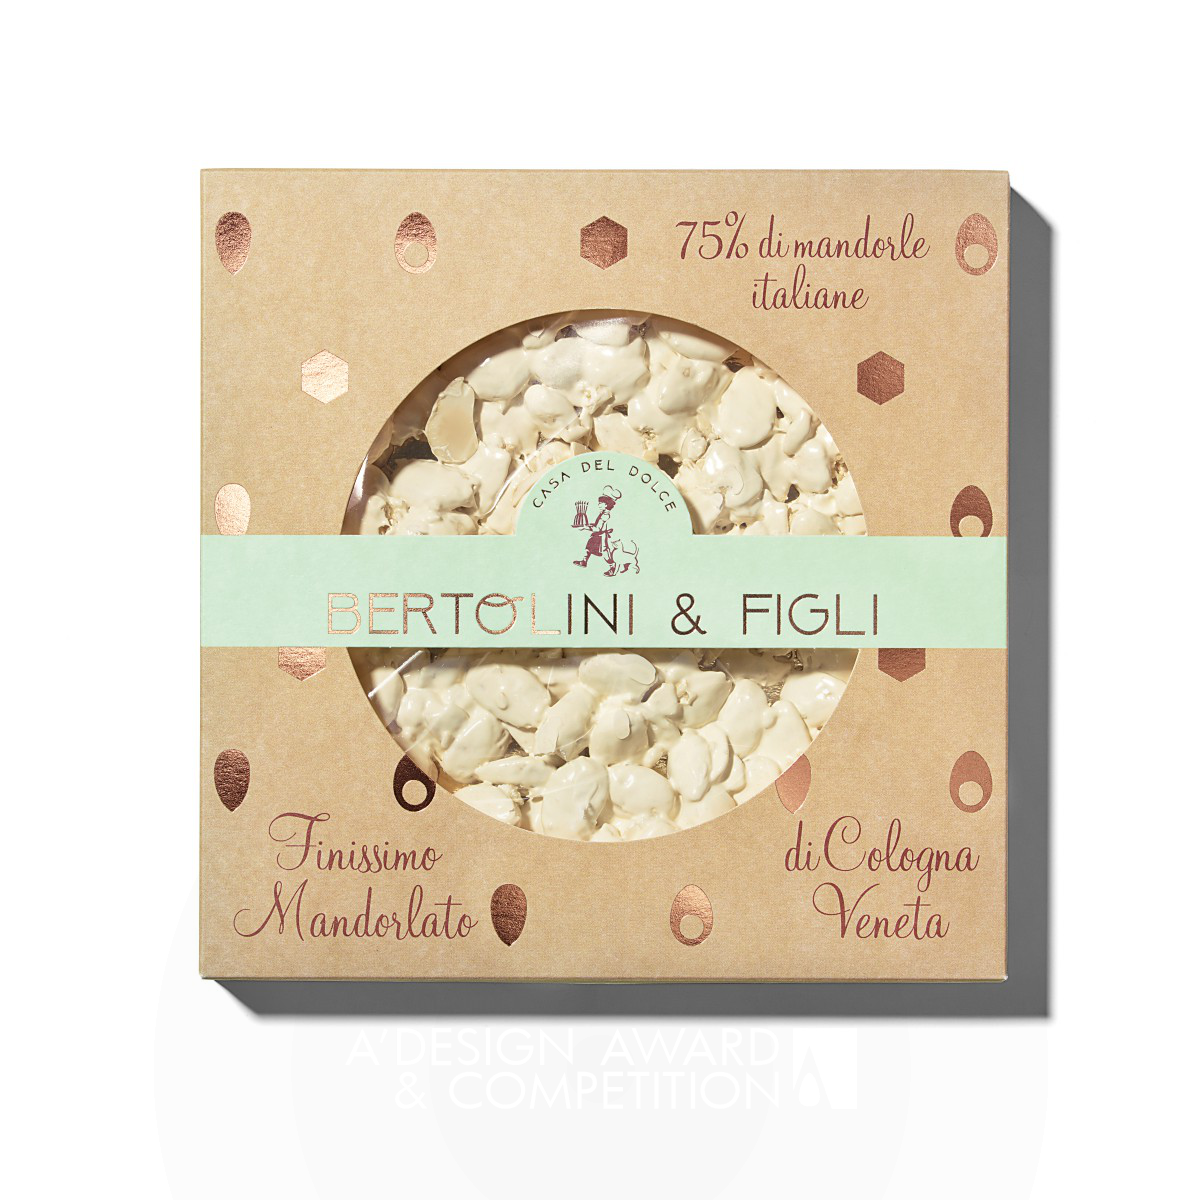 Bertolini and Figli <b>Branding and Packaging Identity